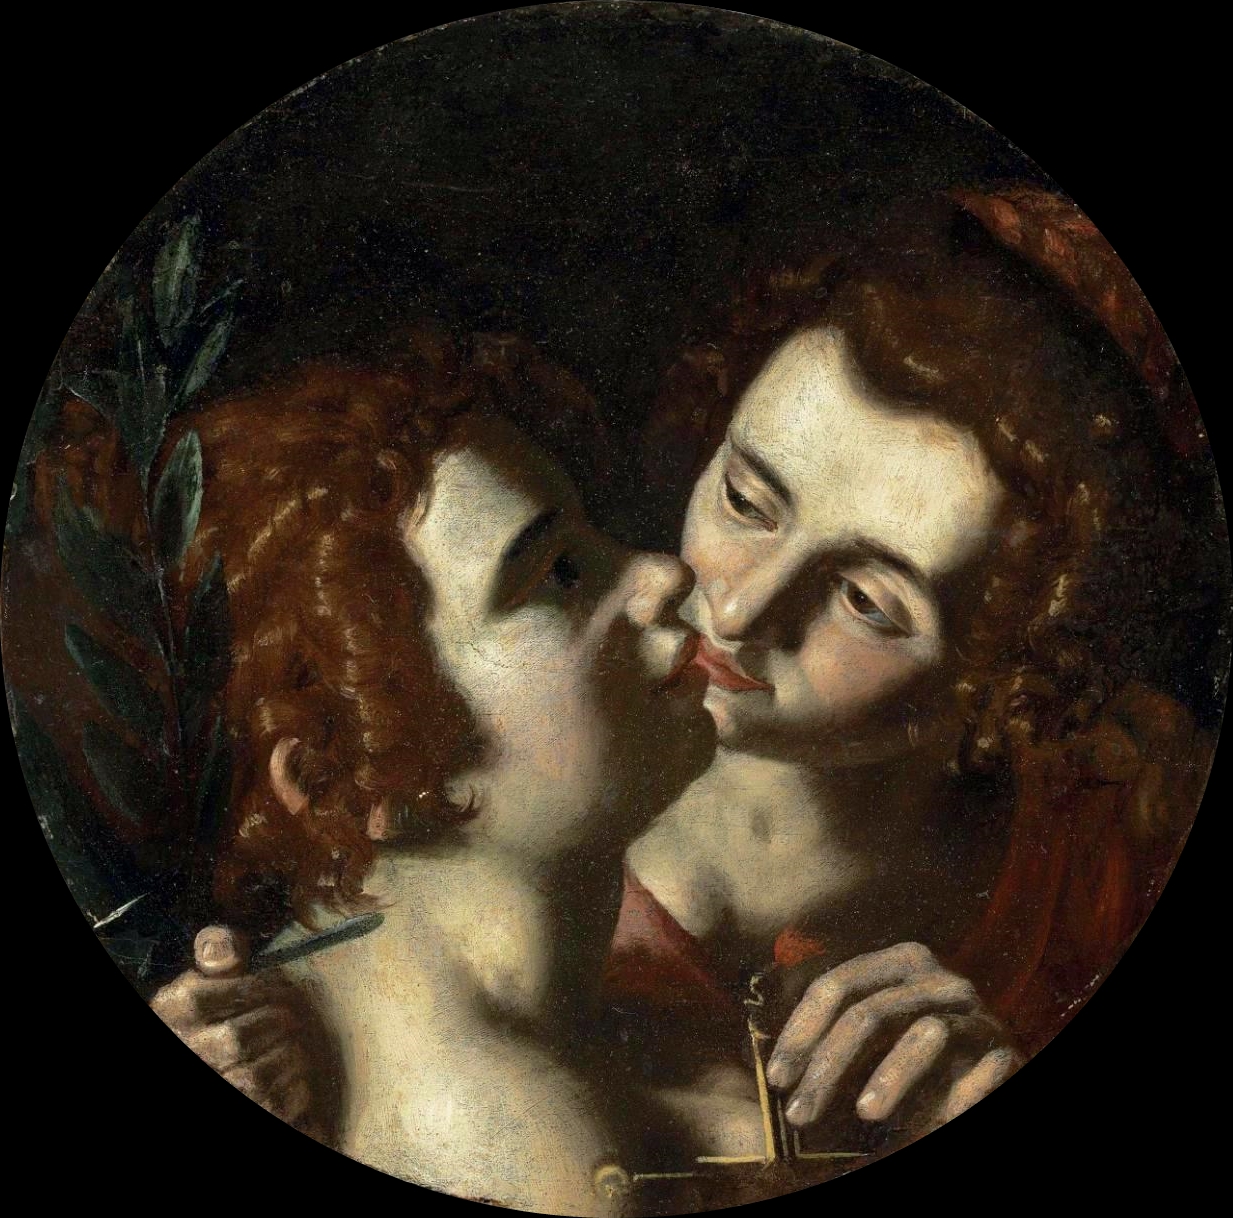 Artemisia+Gentileschi-1593-1652 (23).jpg